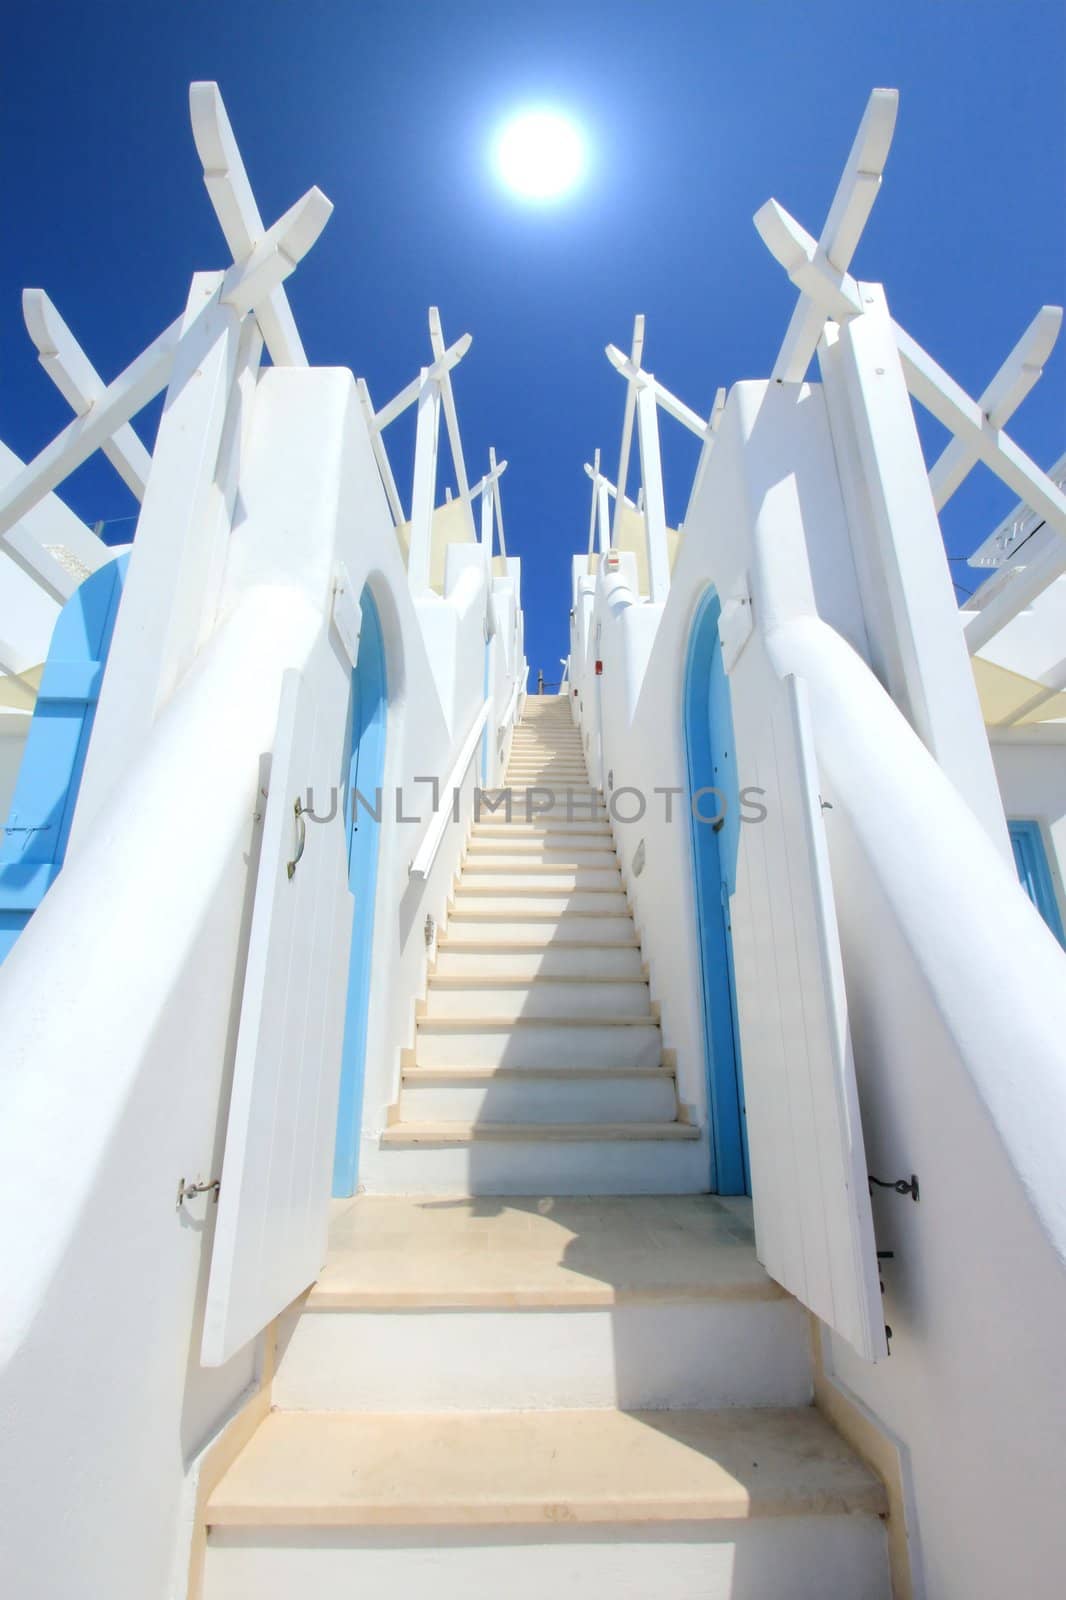 Stairs to the sun, Santorini, Greece by Elenaphotos21